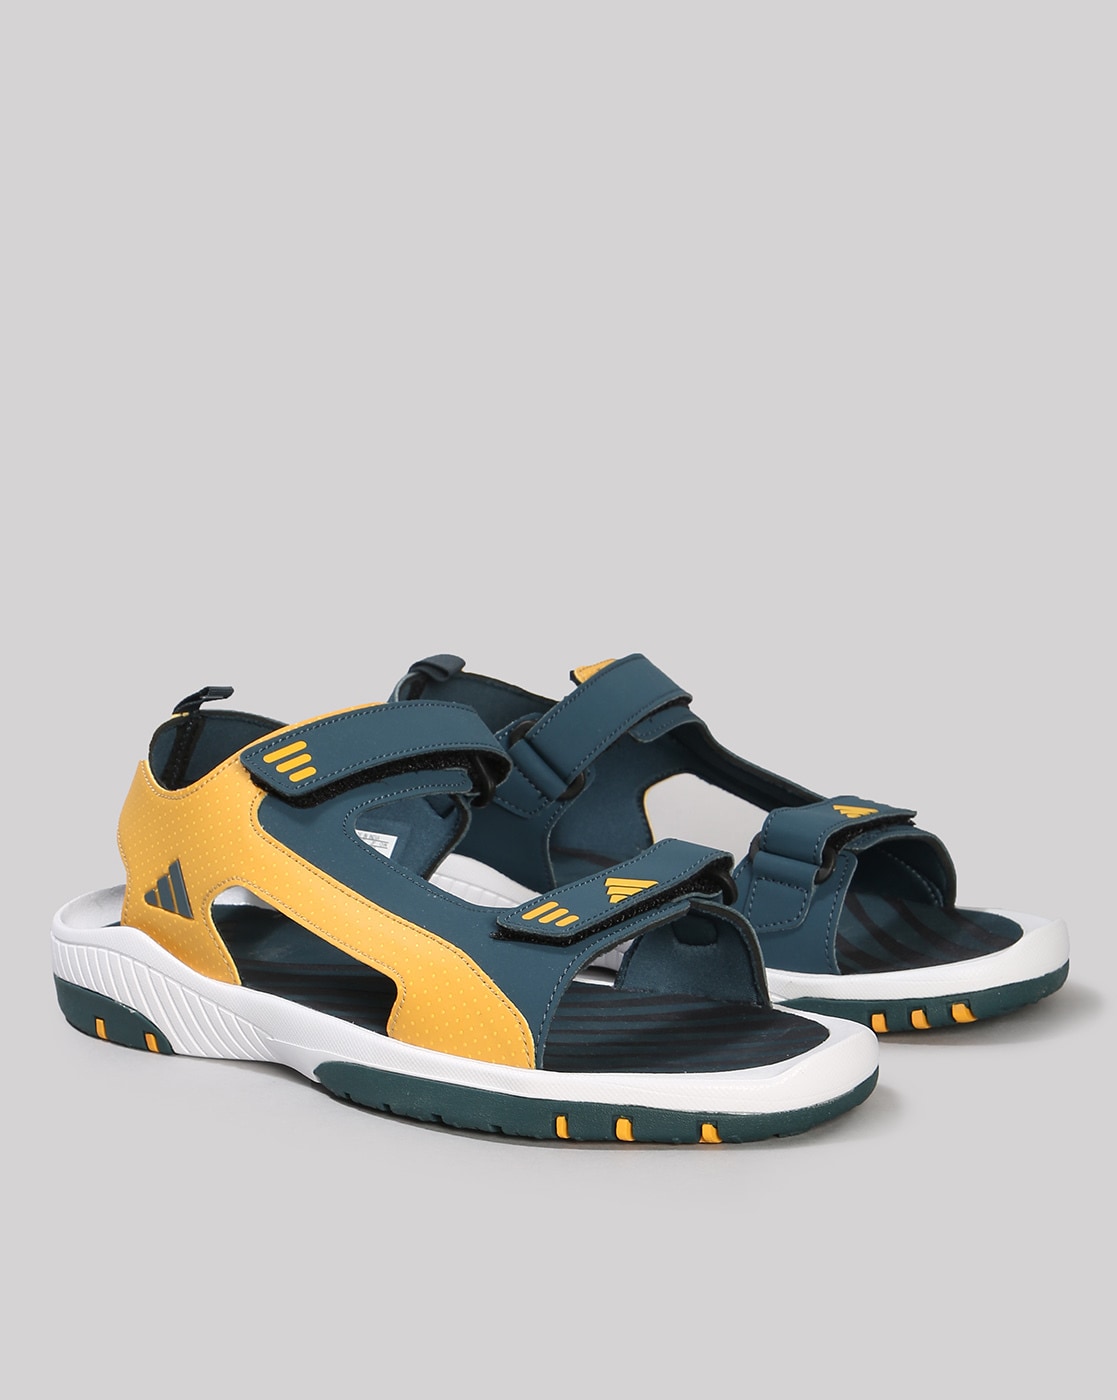 Adidas Slides Sale|unisex Eva Platform Slippers - Thick Sole Beach & Casual  Sandals